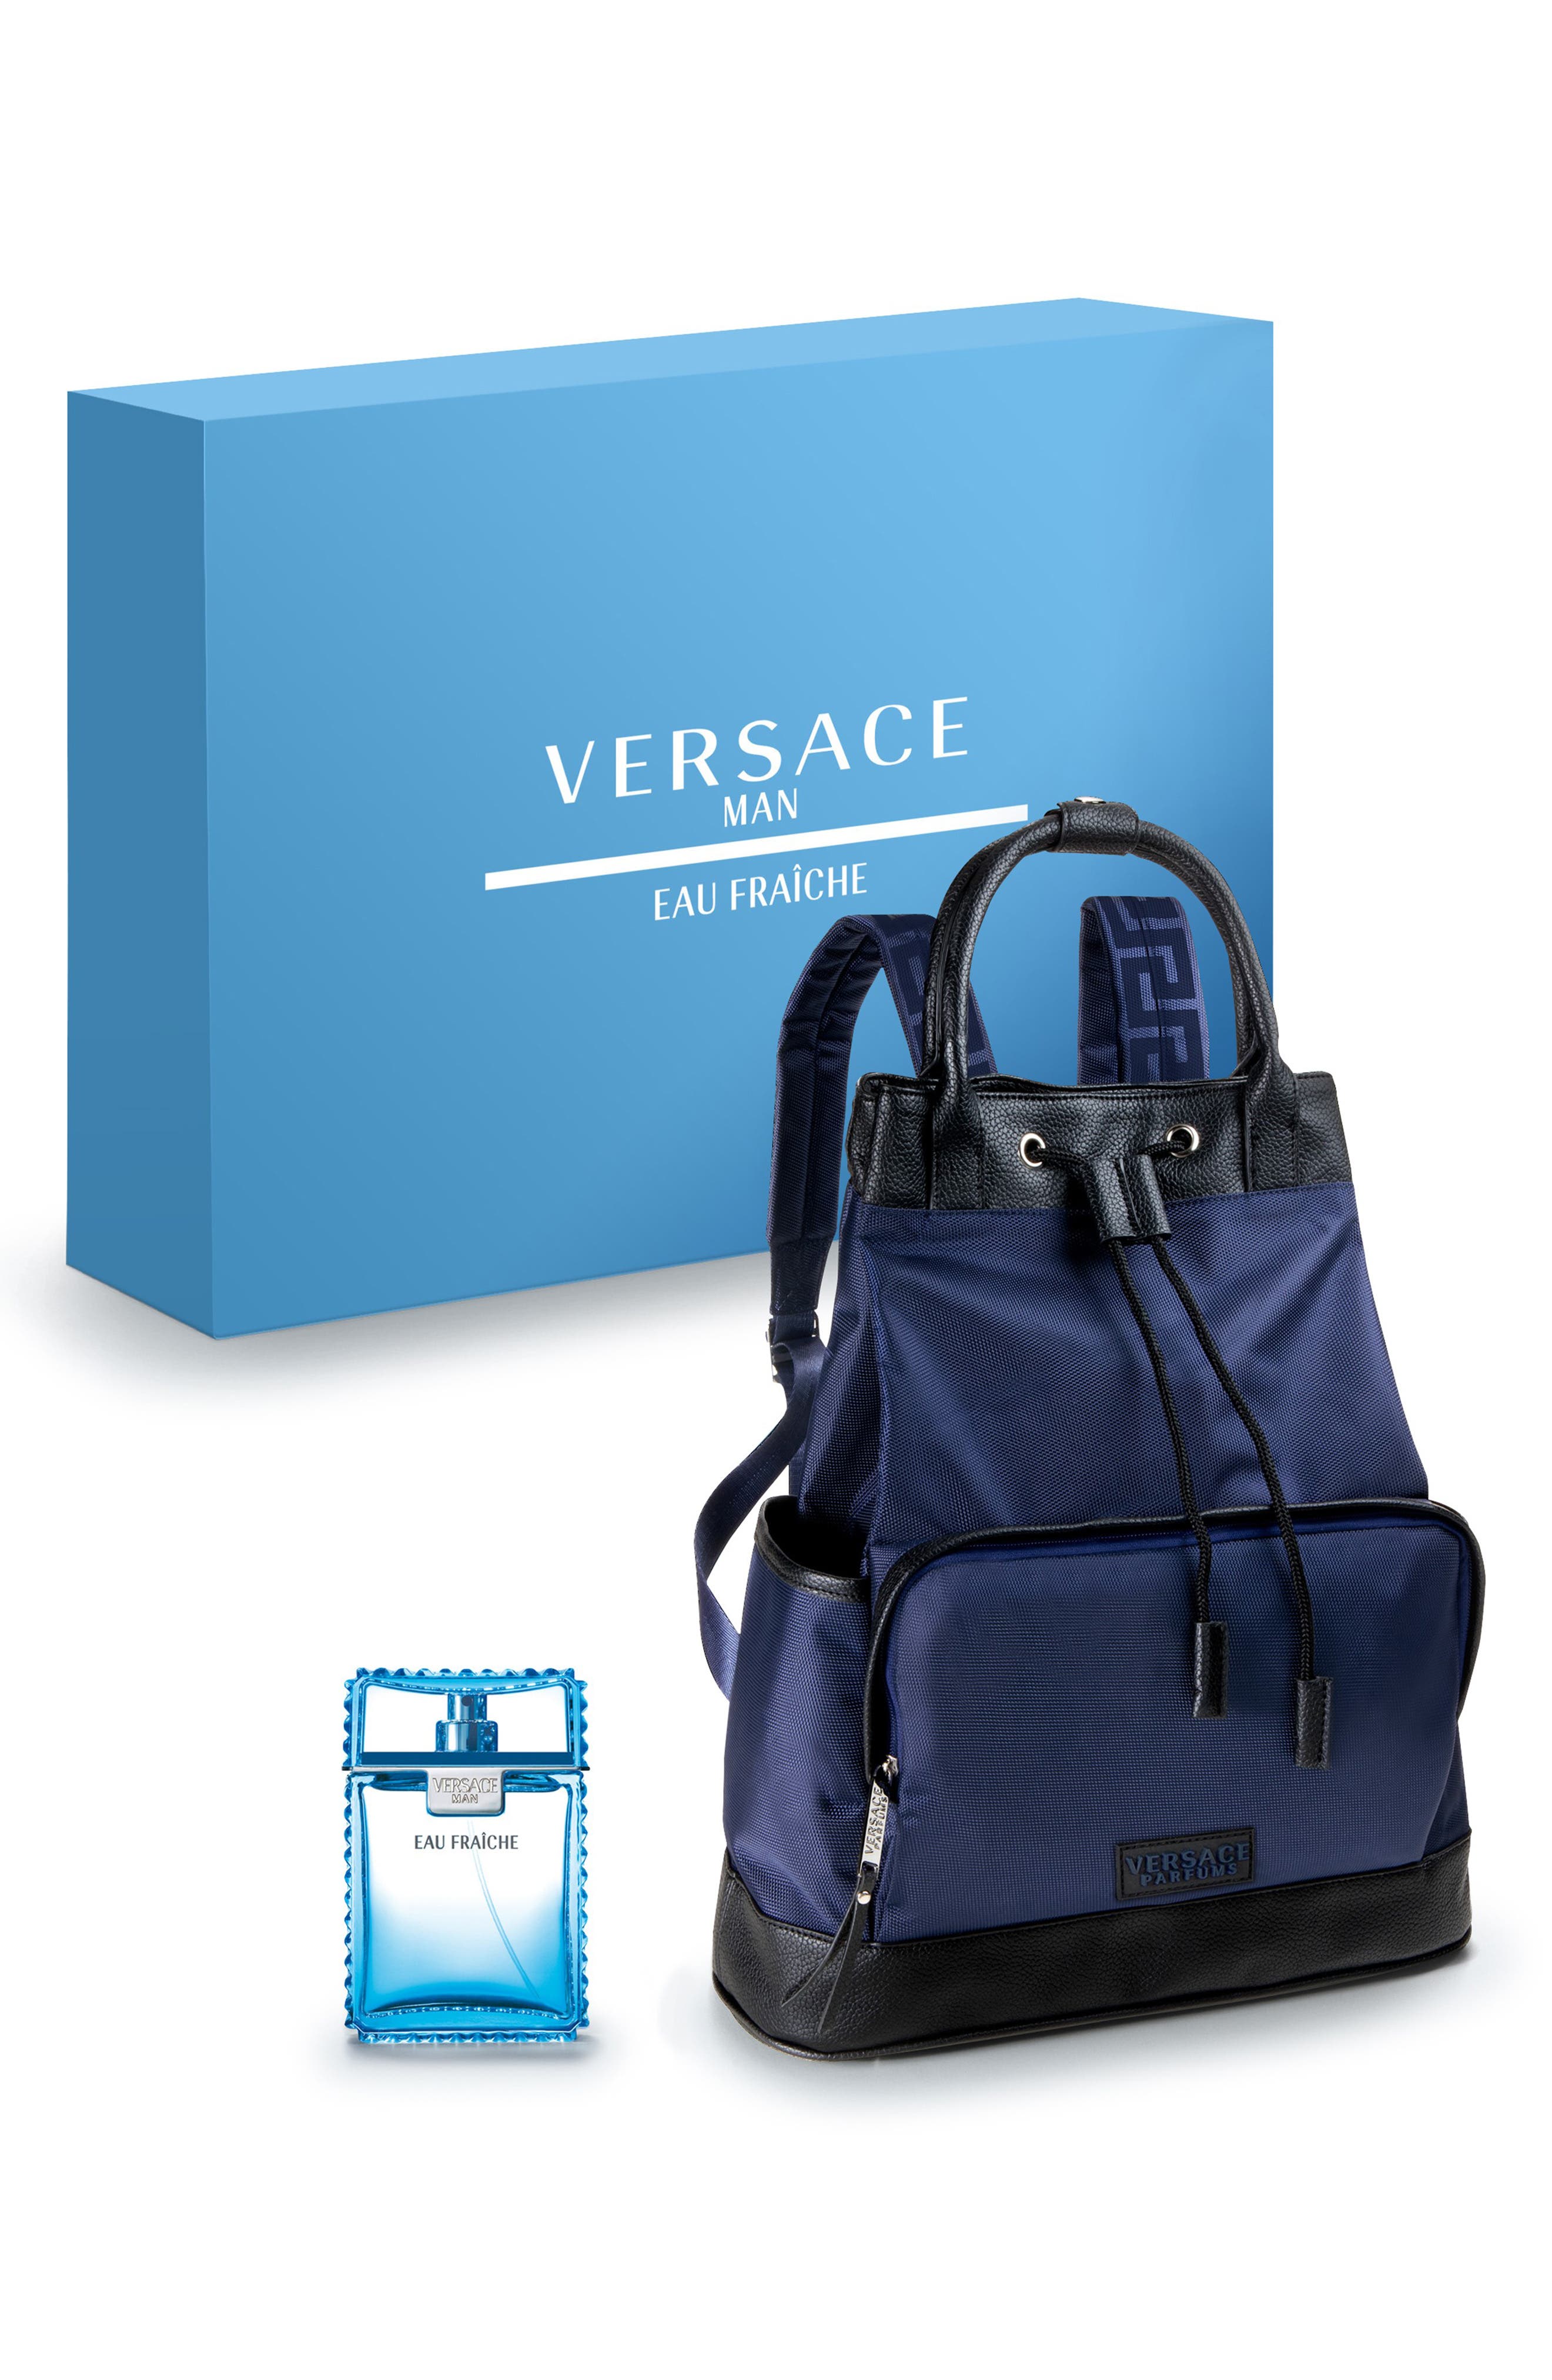 versace cologne gift set with bag